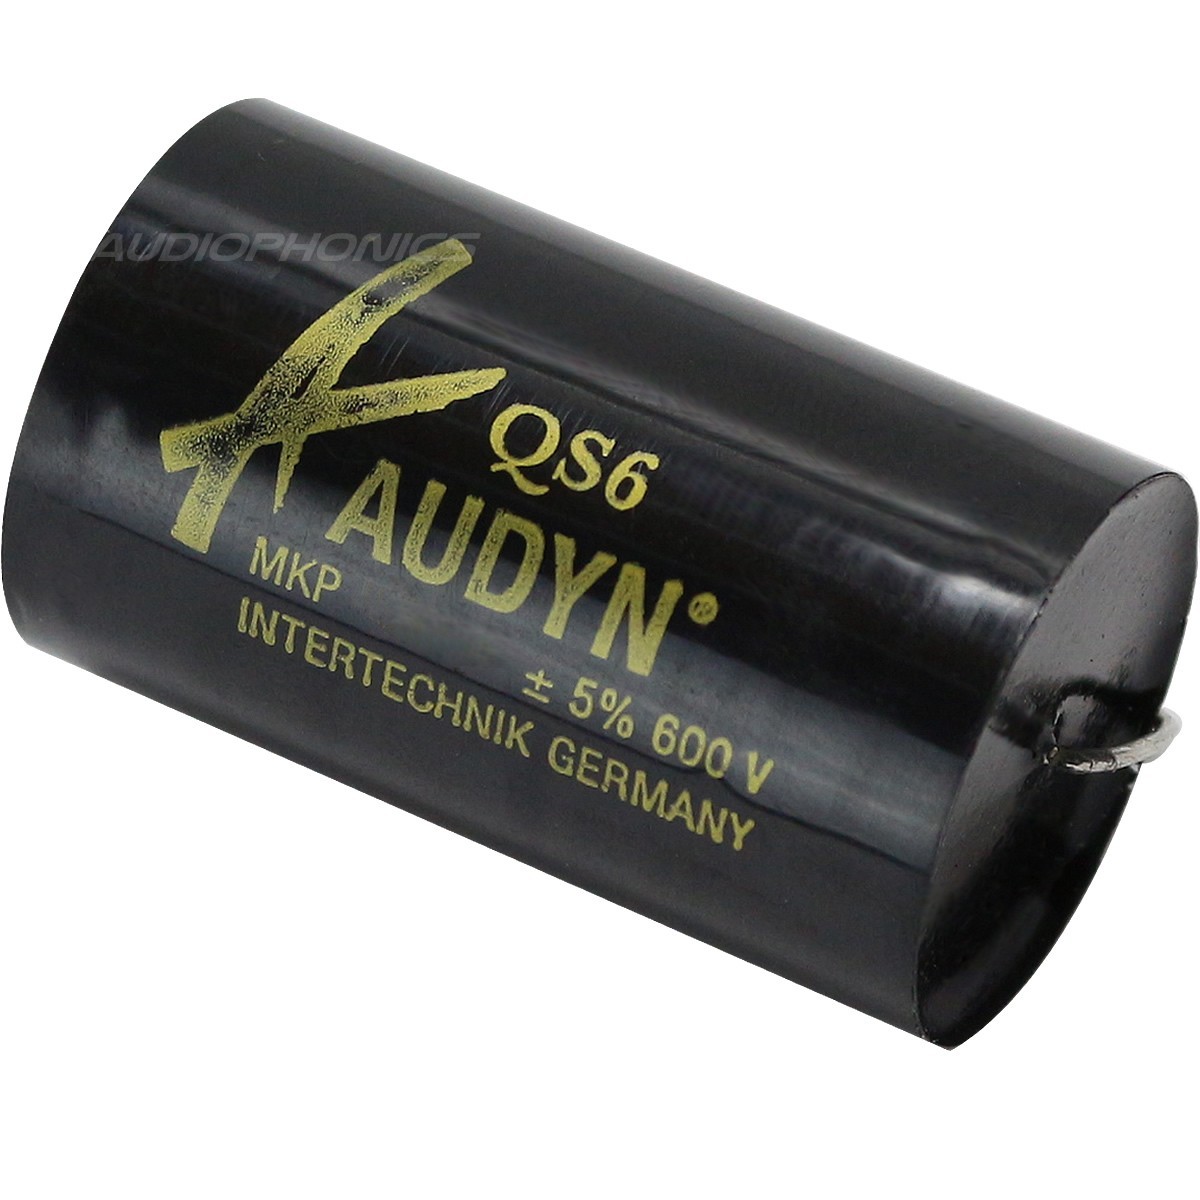 AUDYN CAP QS6 Condensateur MKP 600V 0.47µF